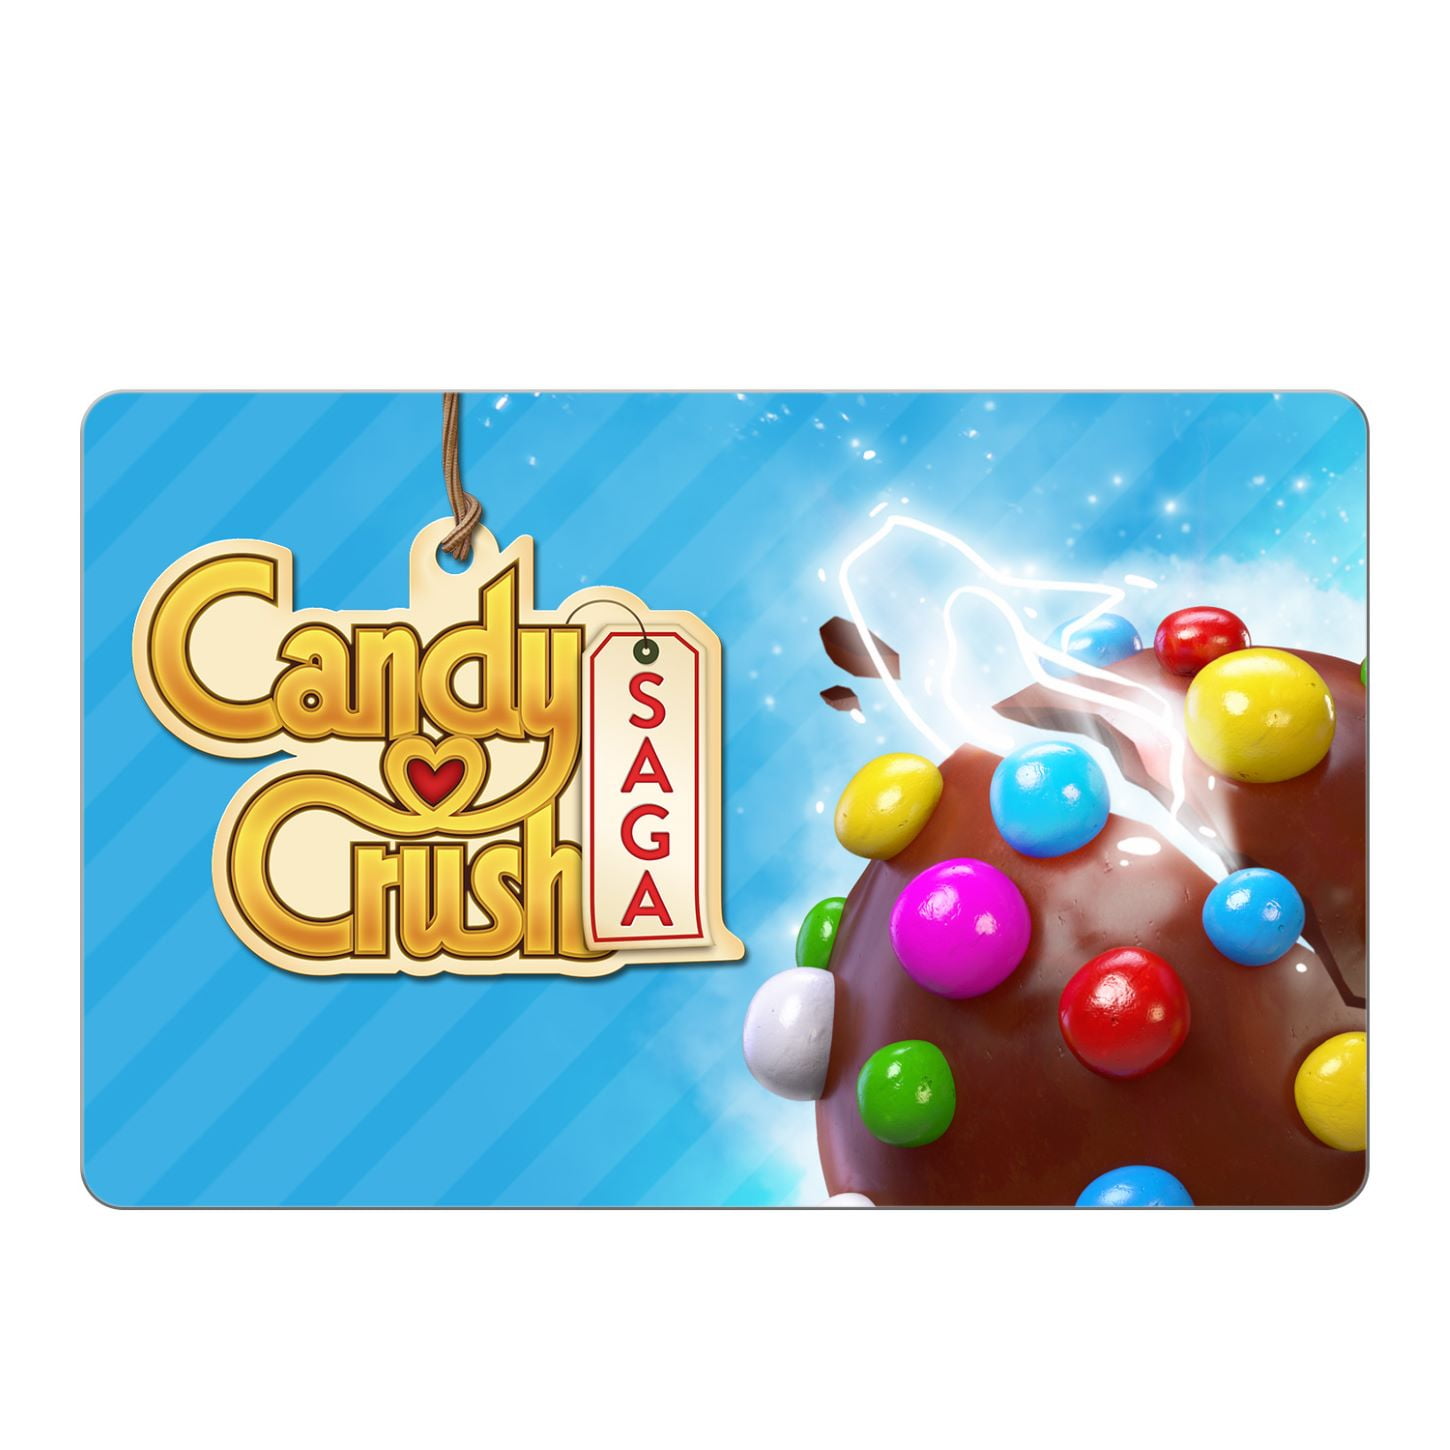 Candy Crush Saga for Xbox listing found in Xbox App - XboxEra